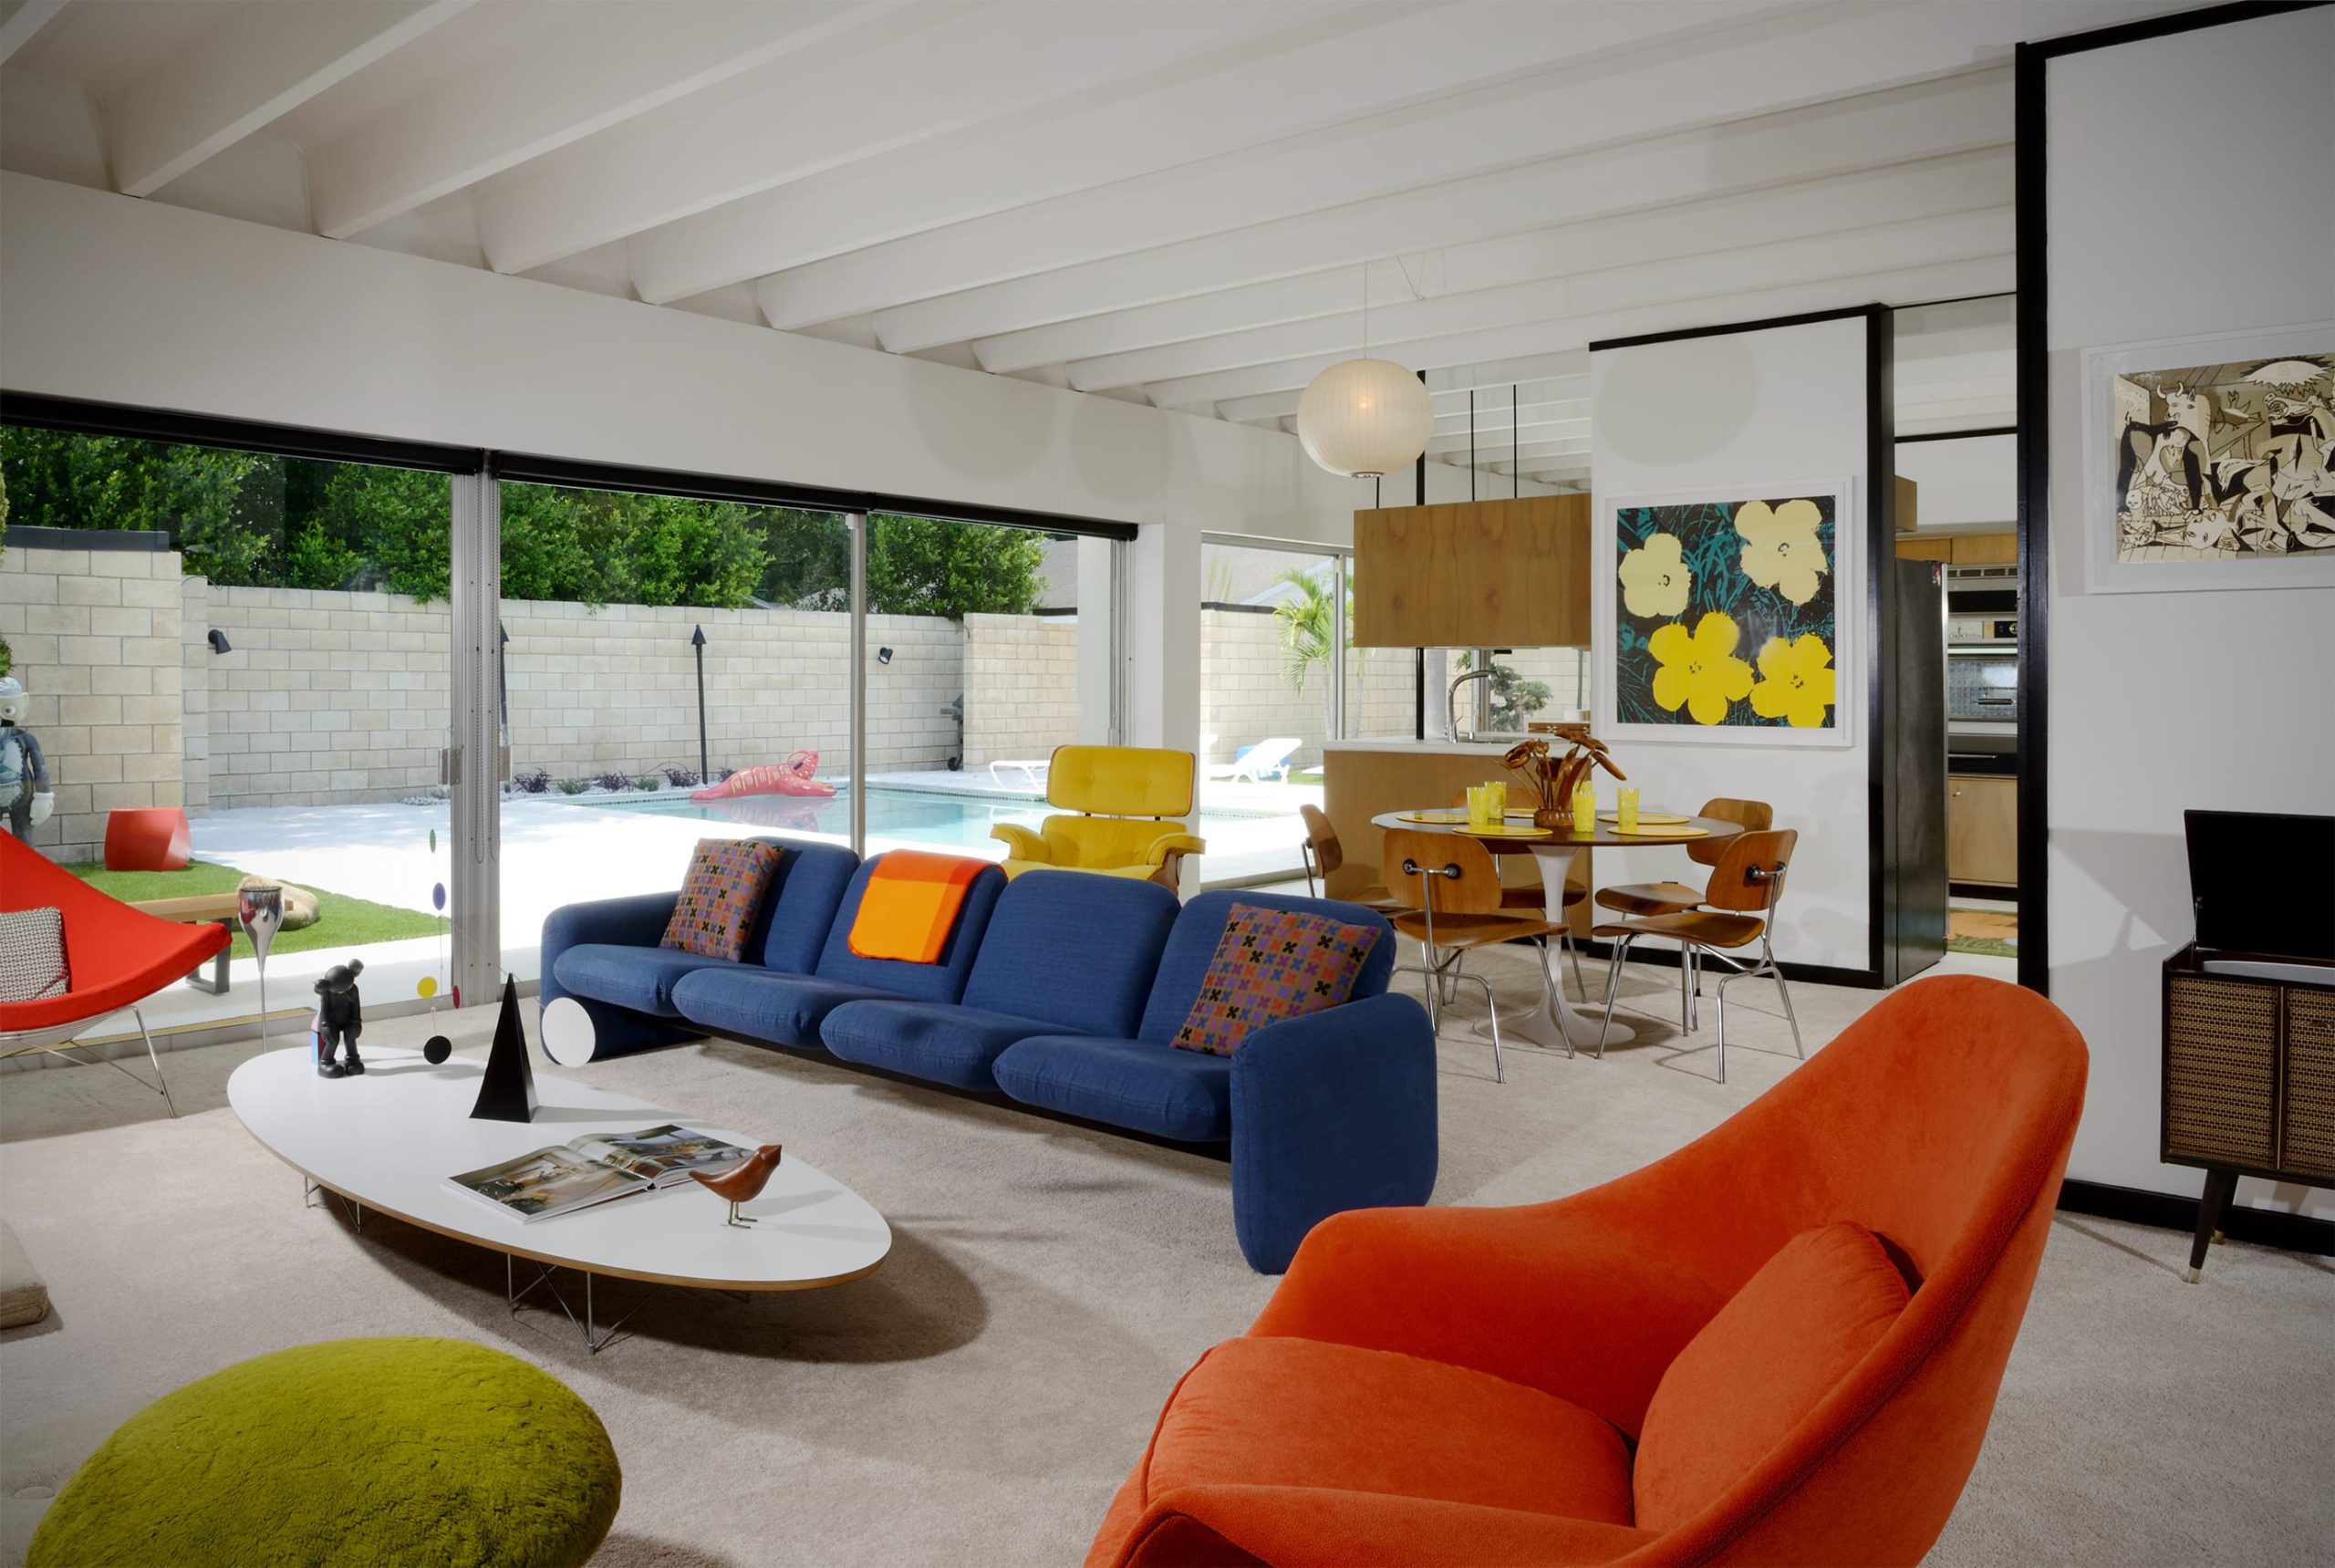 Christopher florentino - midcentury home Florida - living room